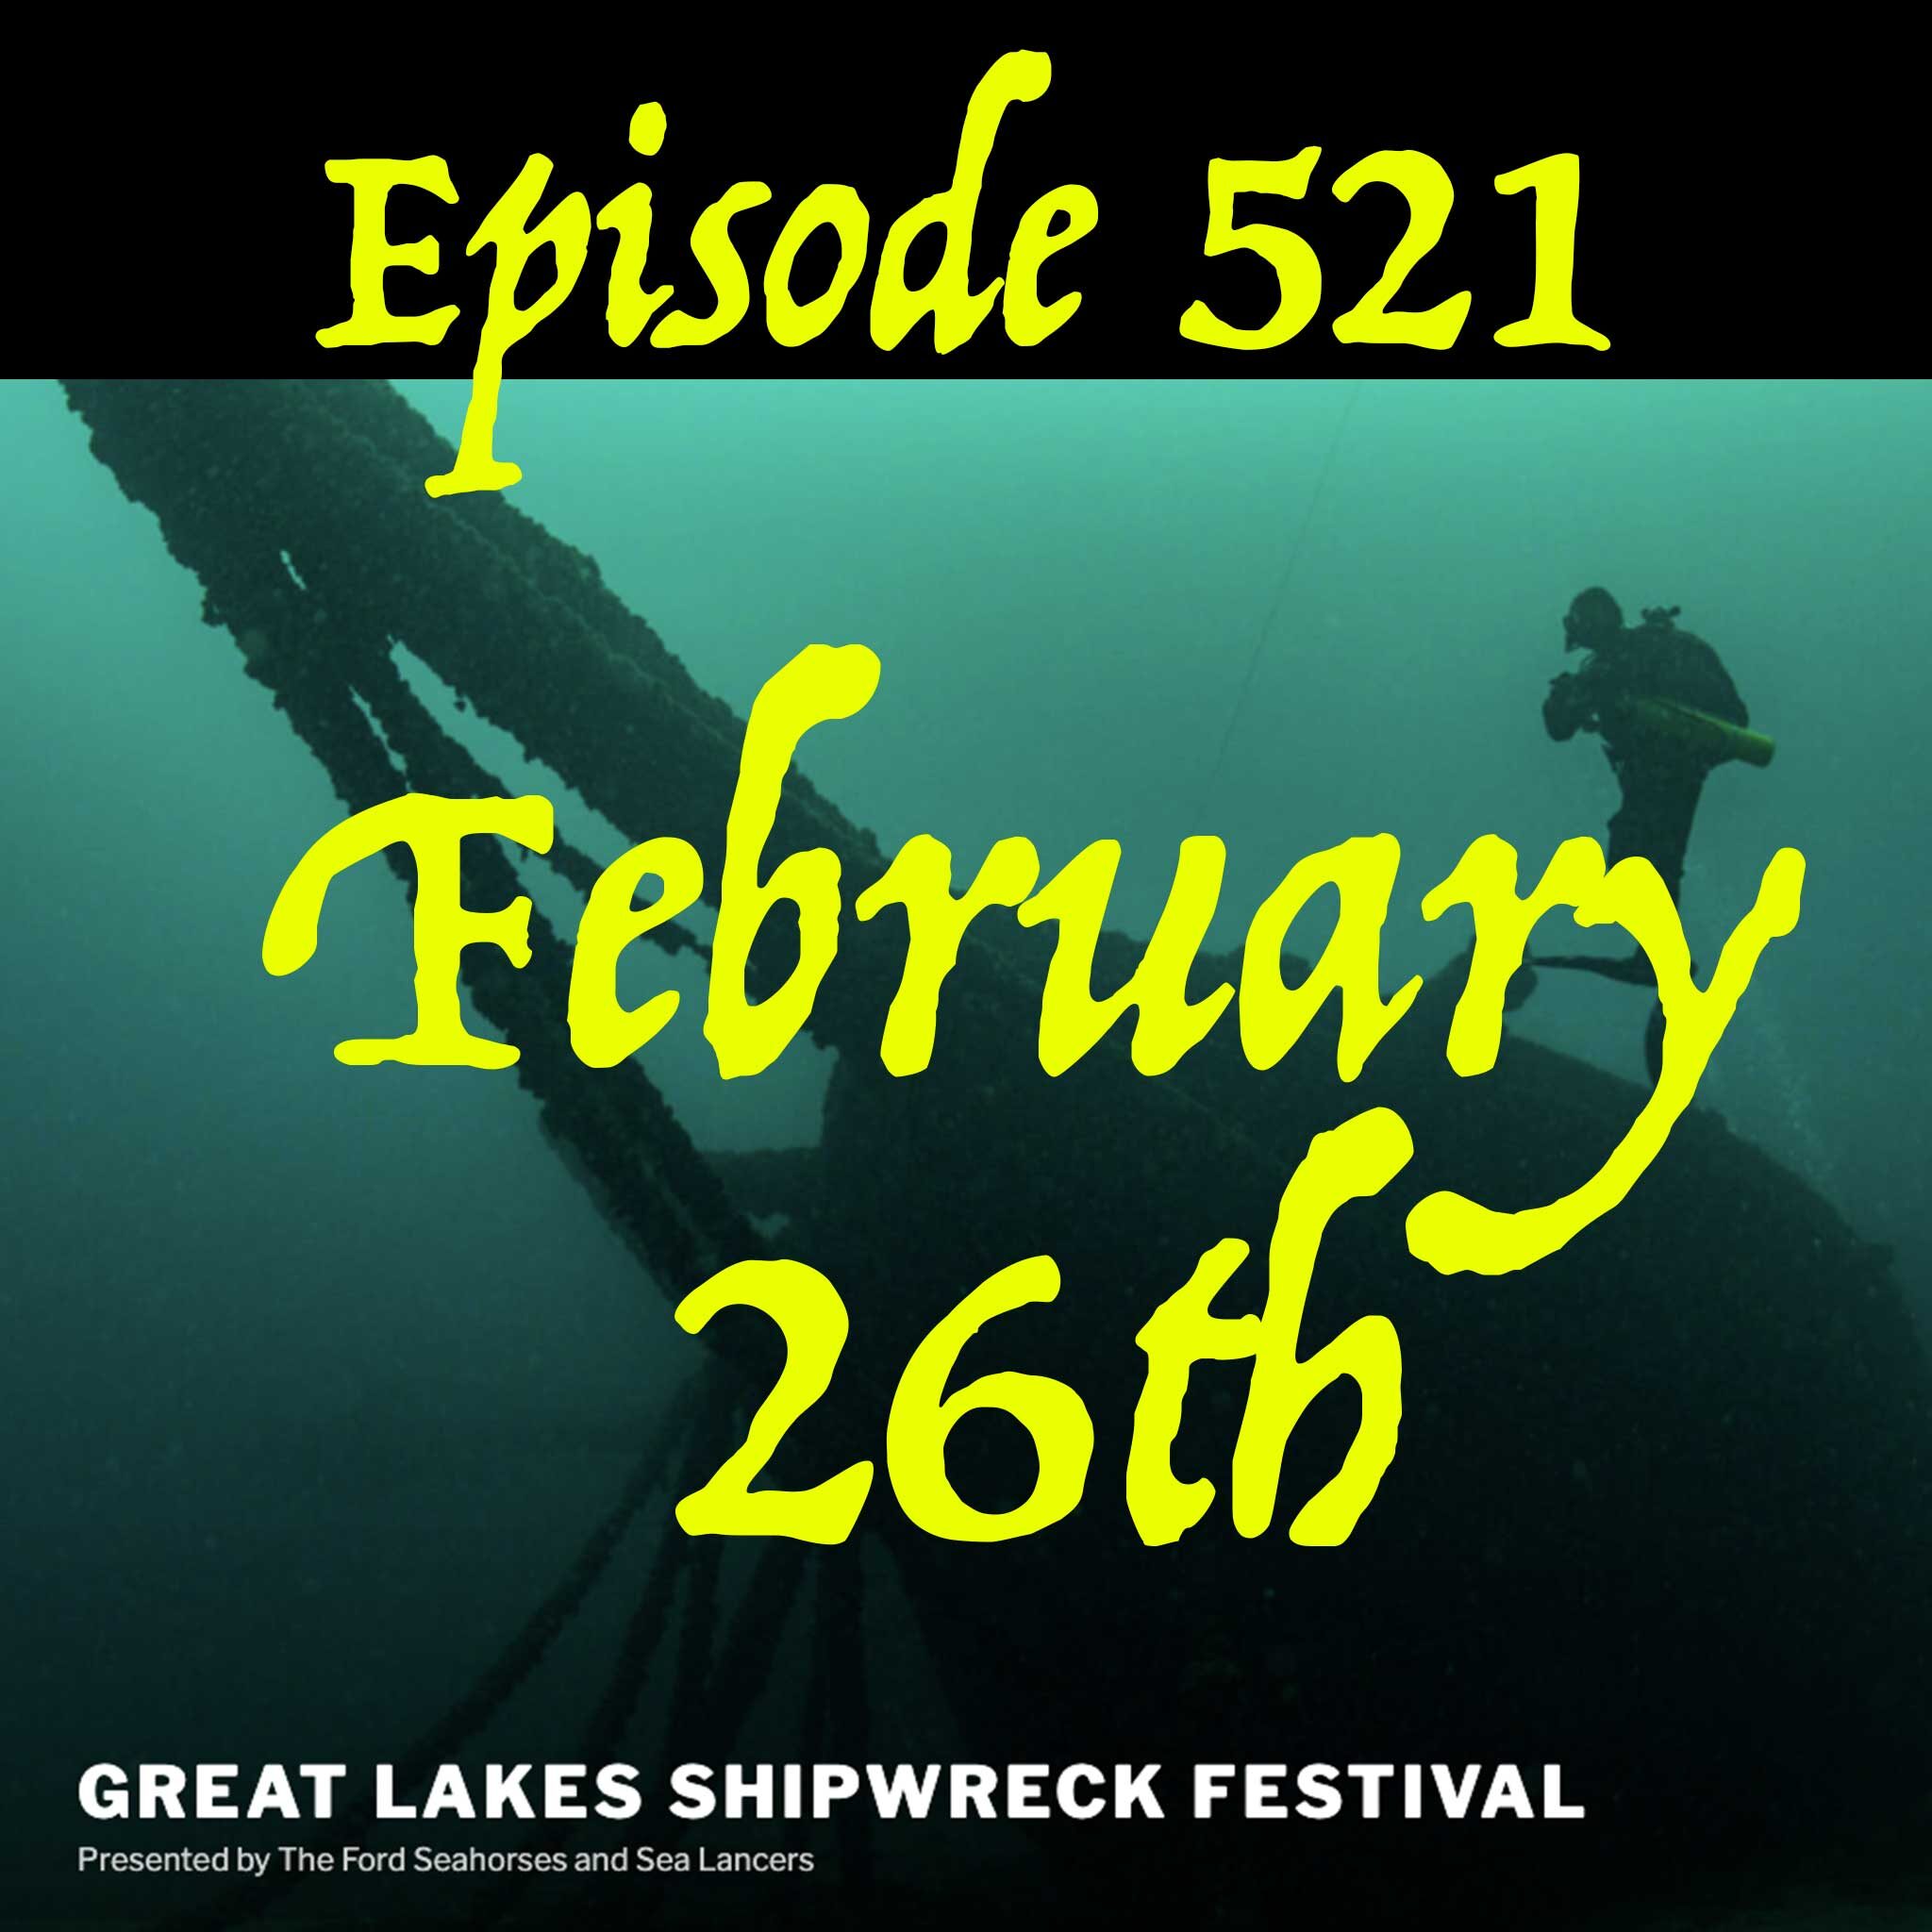 521 - Great Lakes Shipwreck Festival